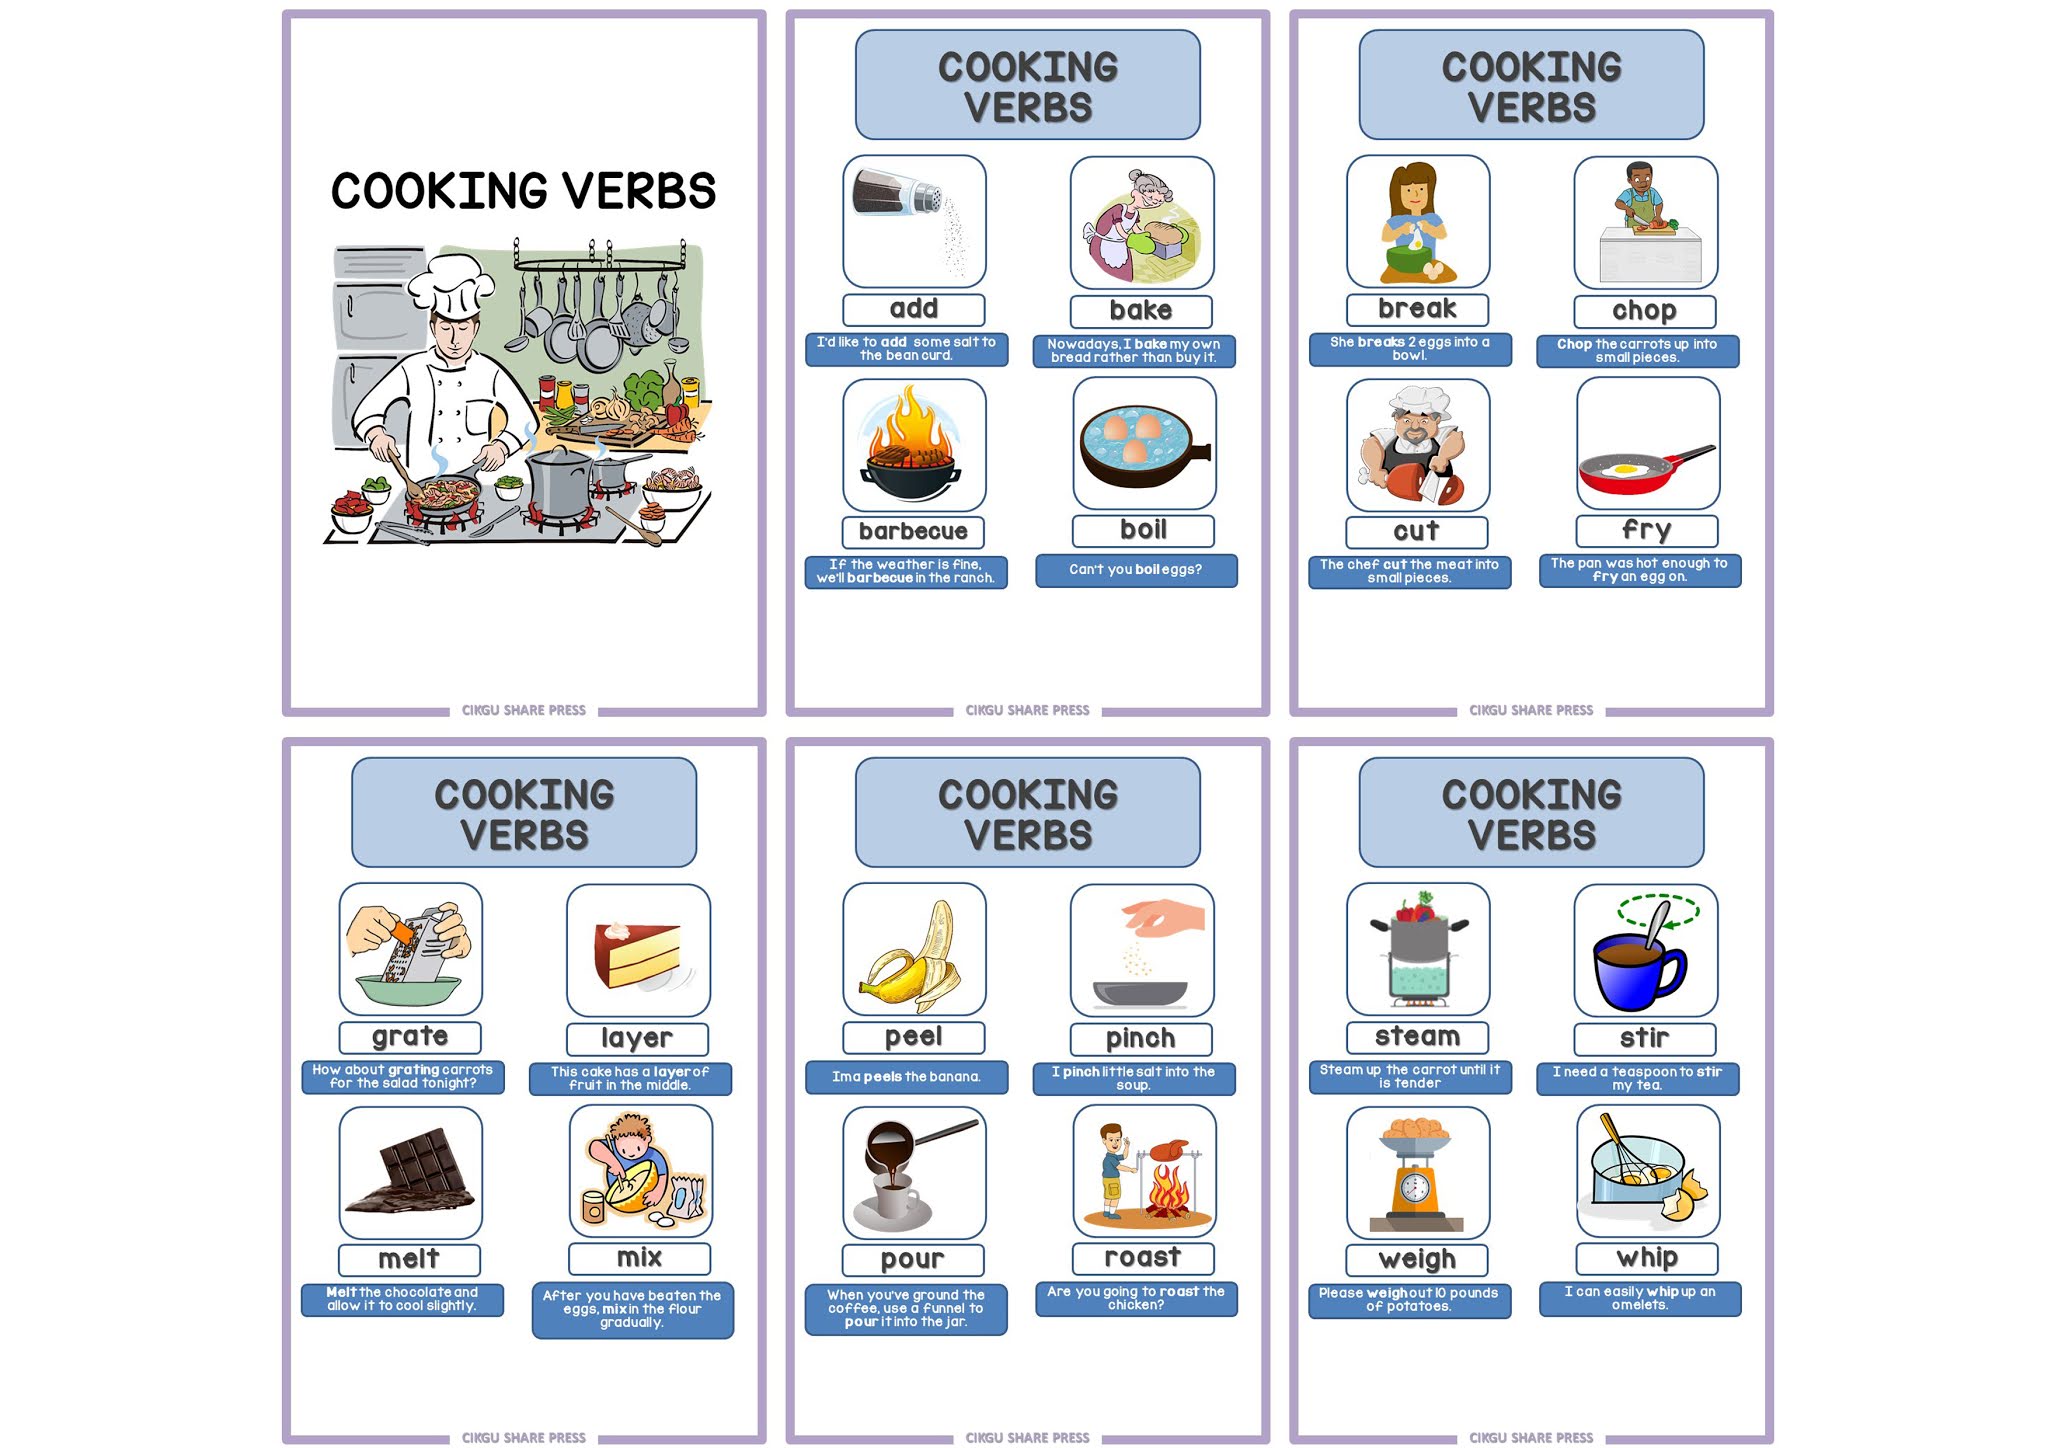 Cooking verbs. Cooking verbs Dictionary. Cooking verbs picture Dictionary. To spread Cooking verb. Cook в прошедшем